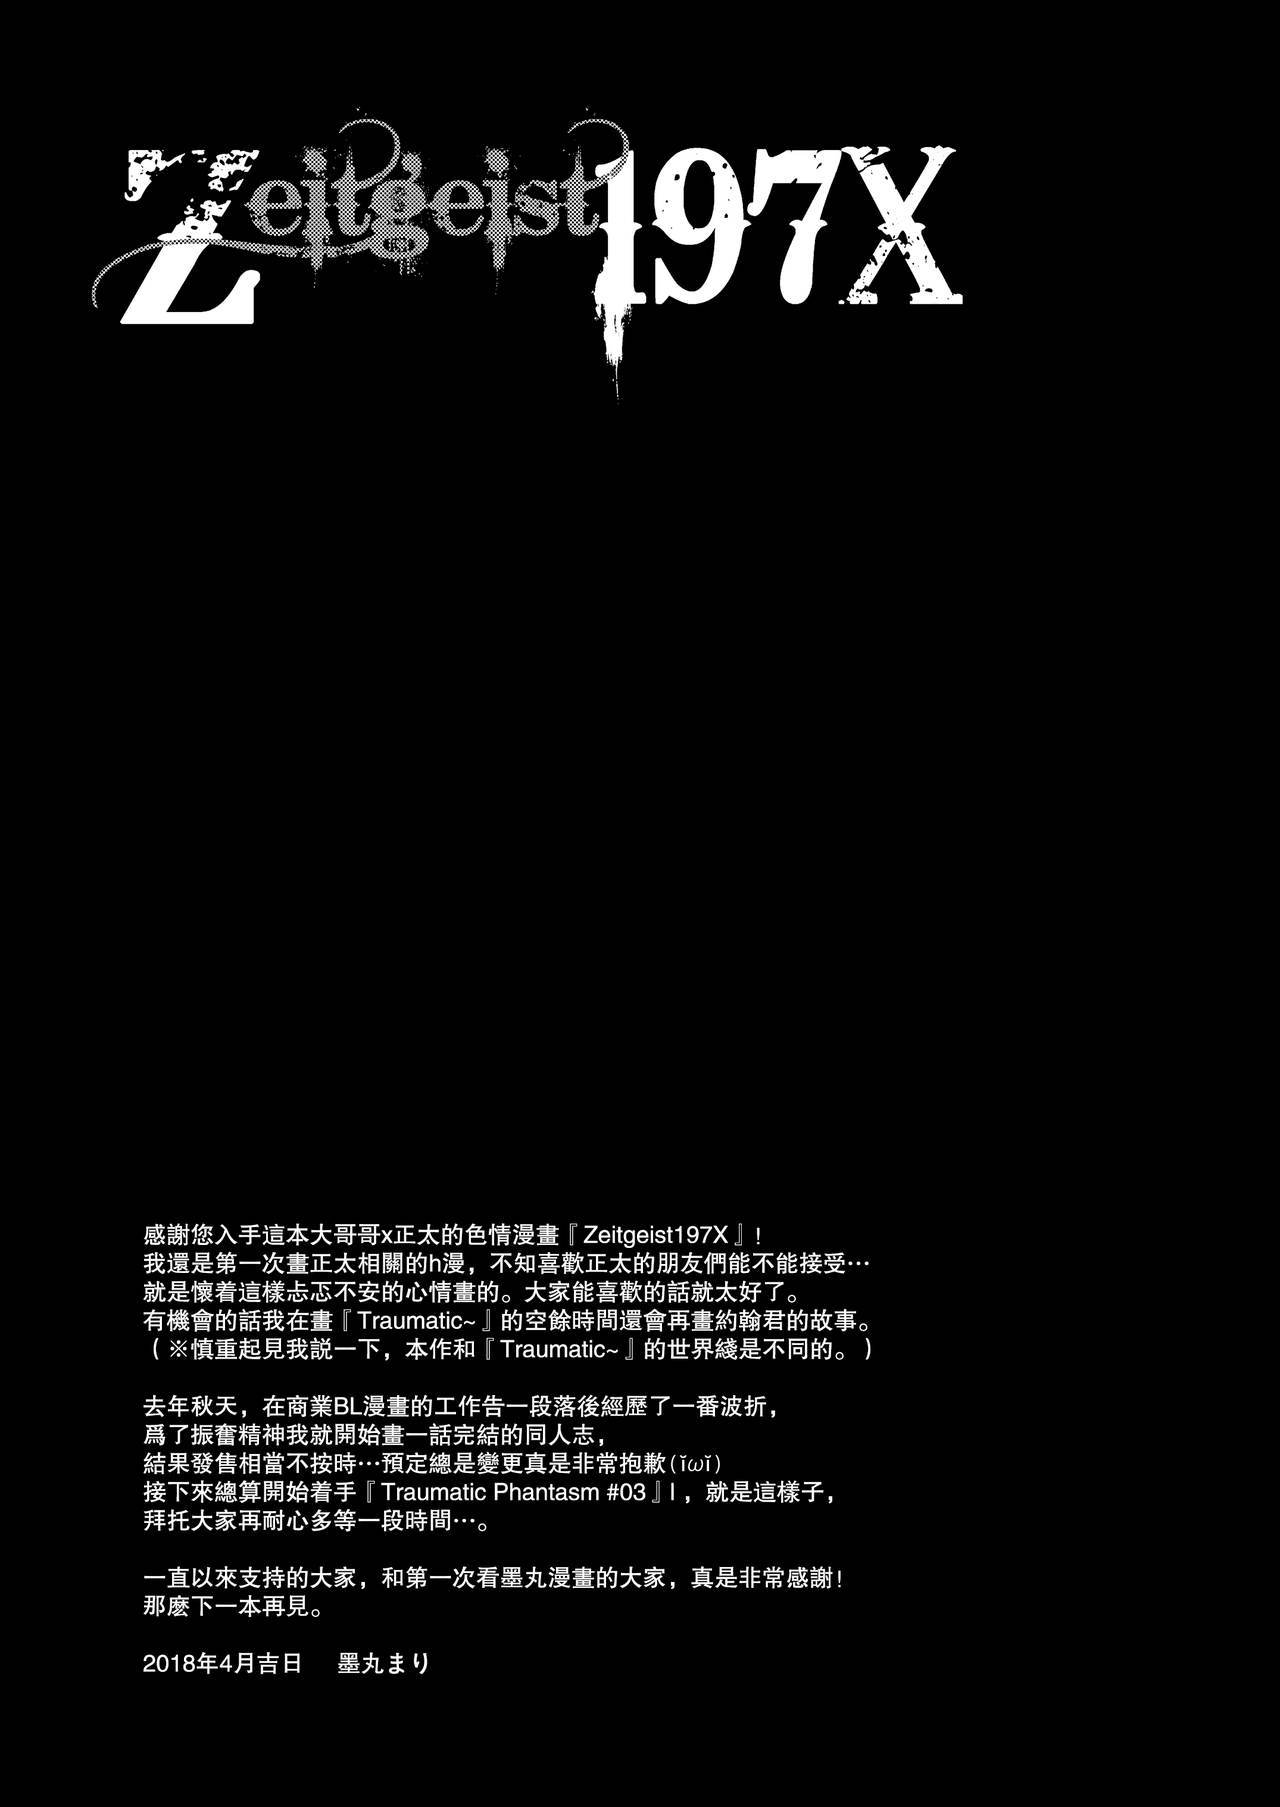 Zeitgeist197X |時間代精神197X